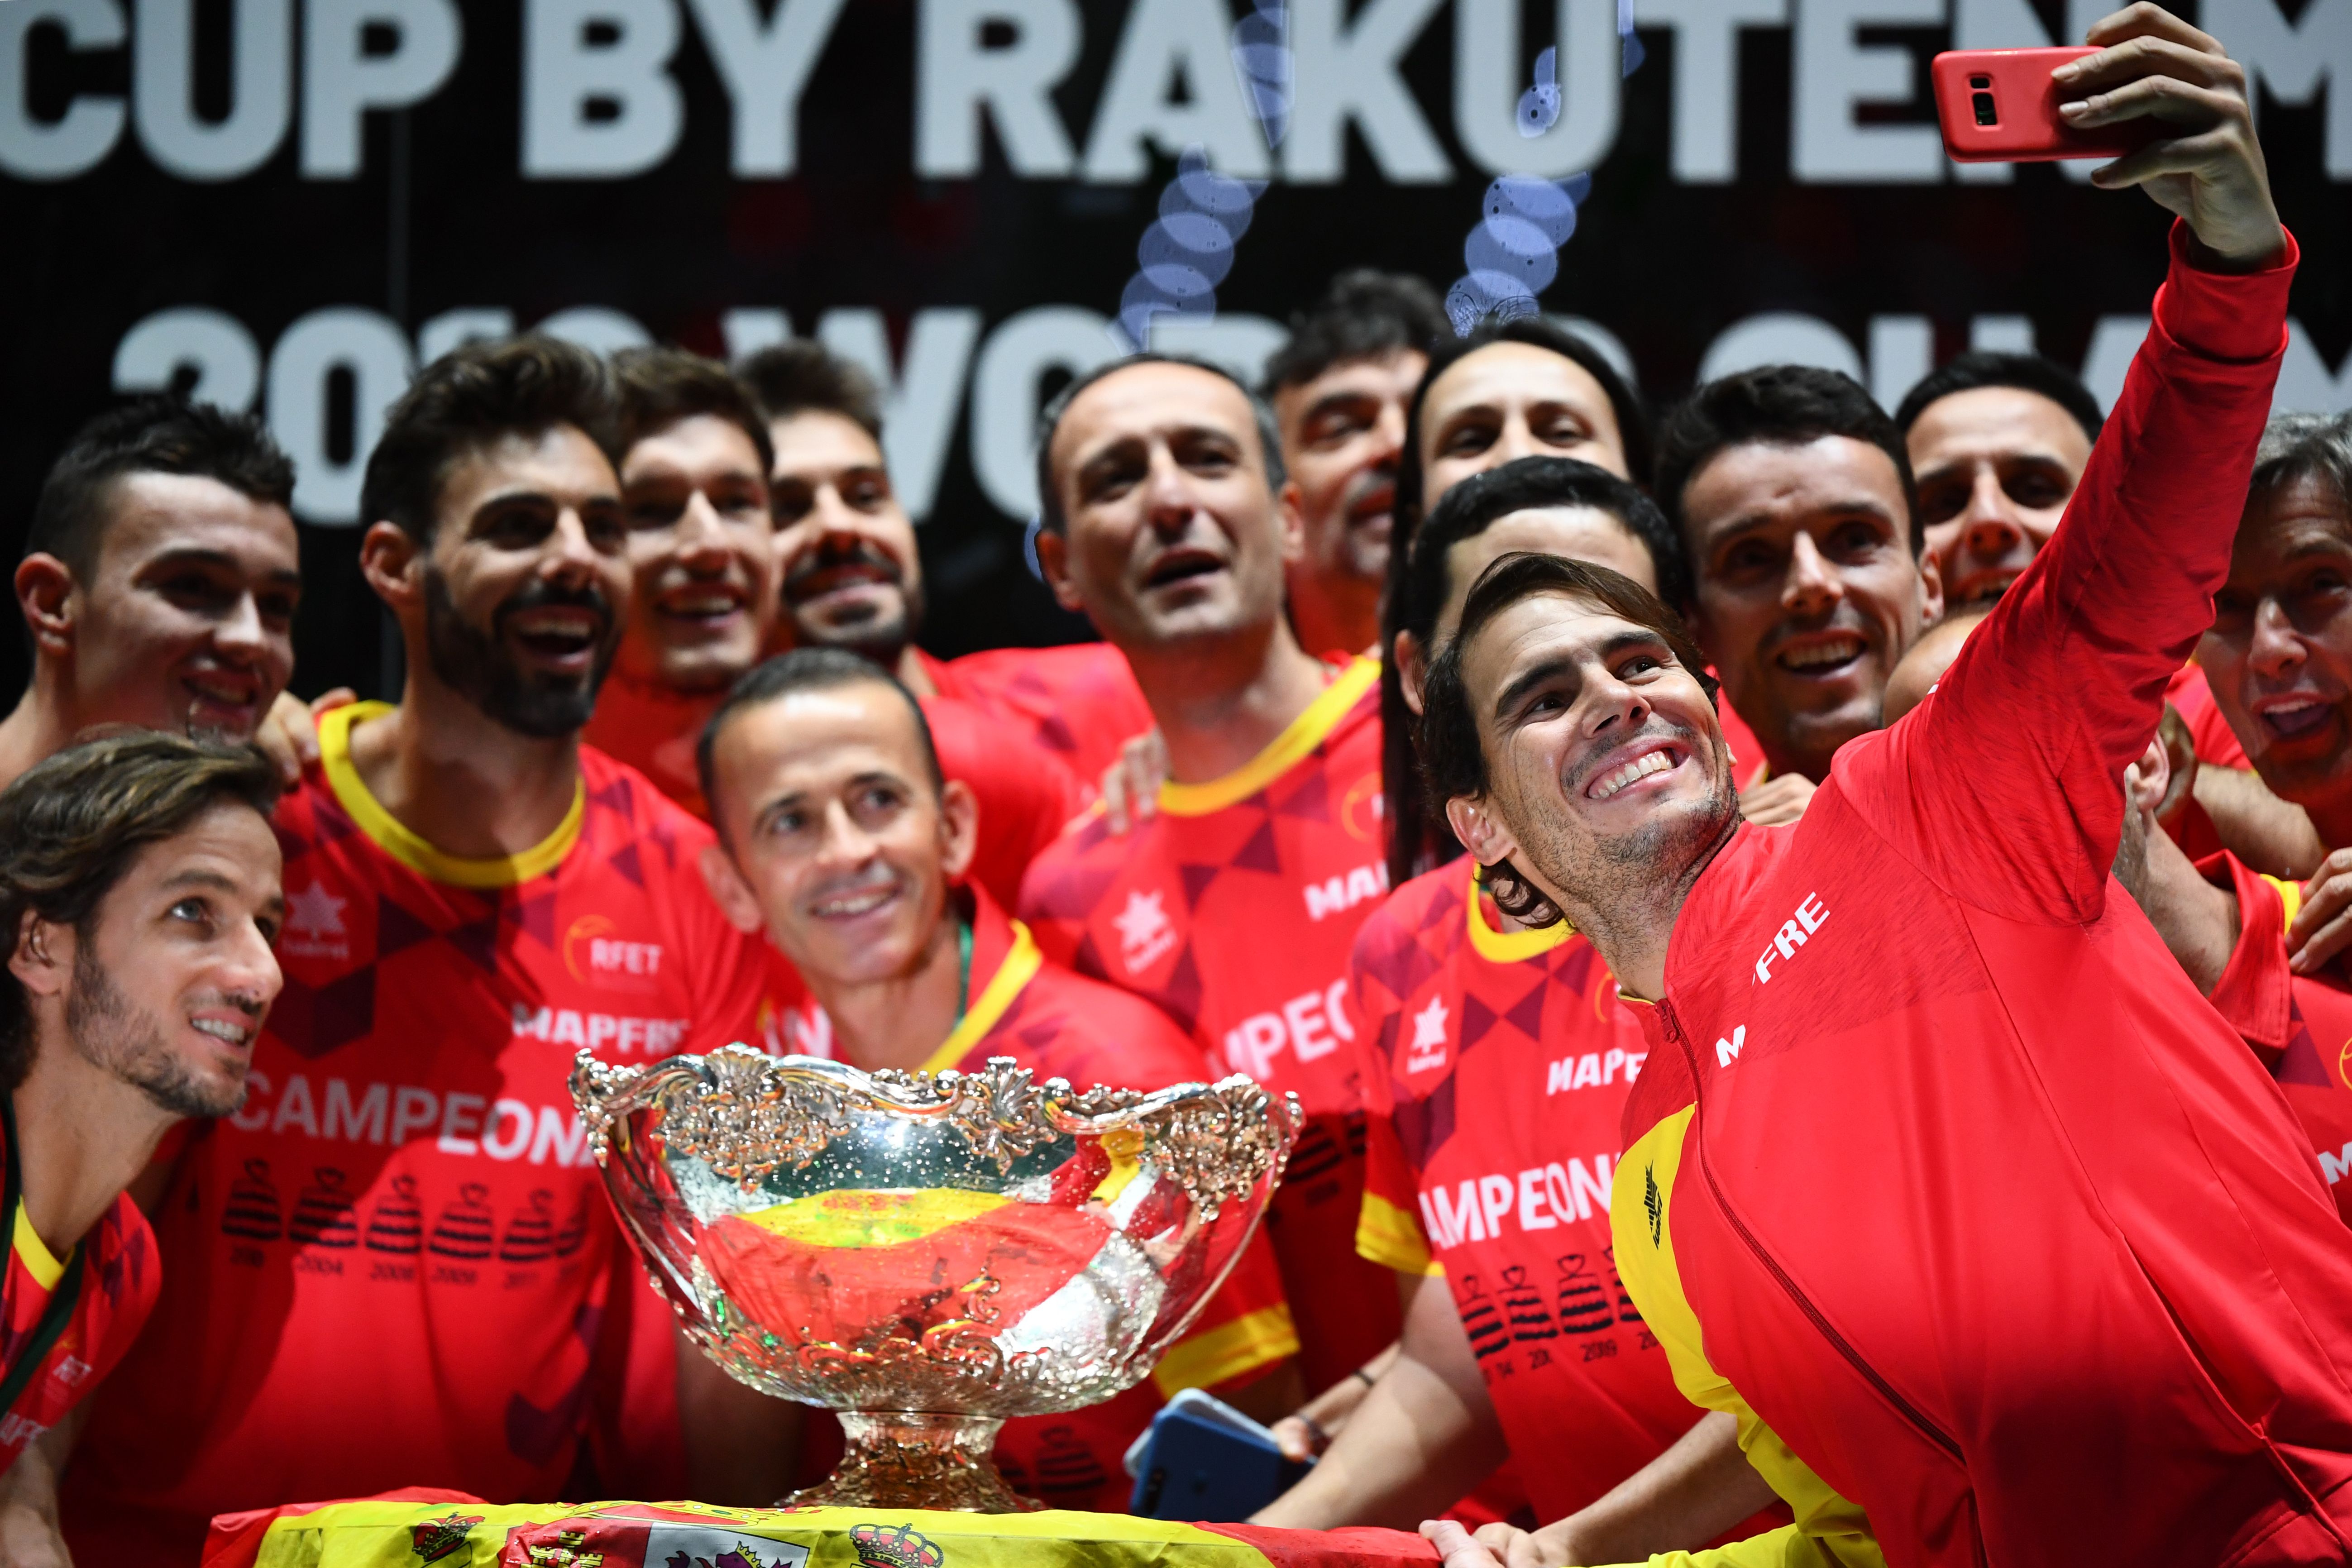 Supergallery trionfo Spagna Davis Cup